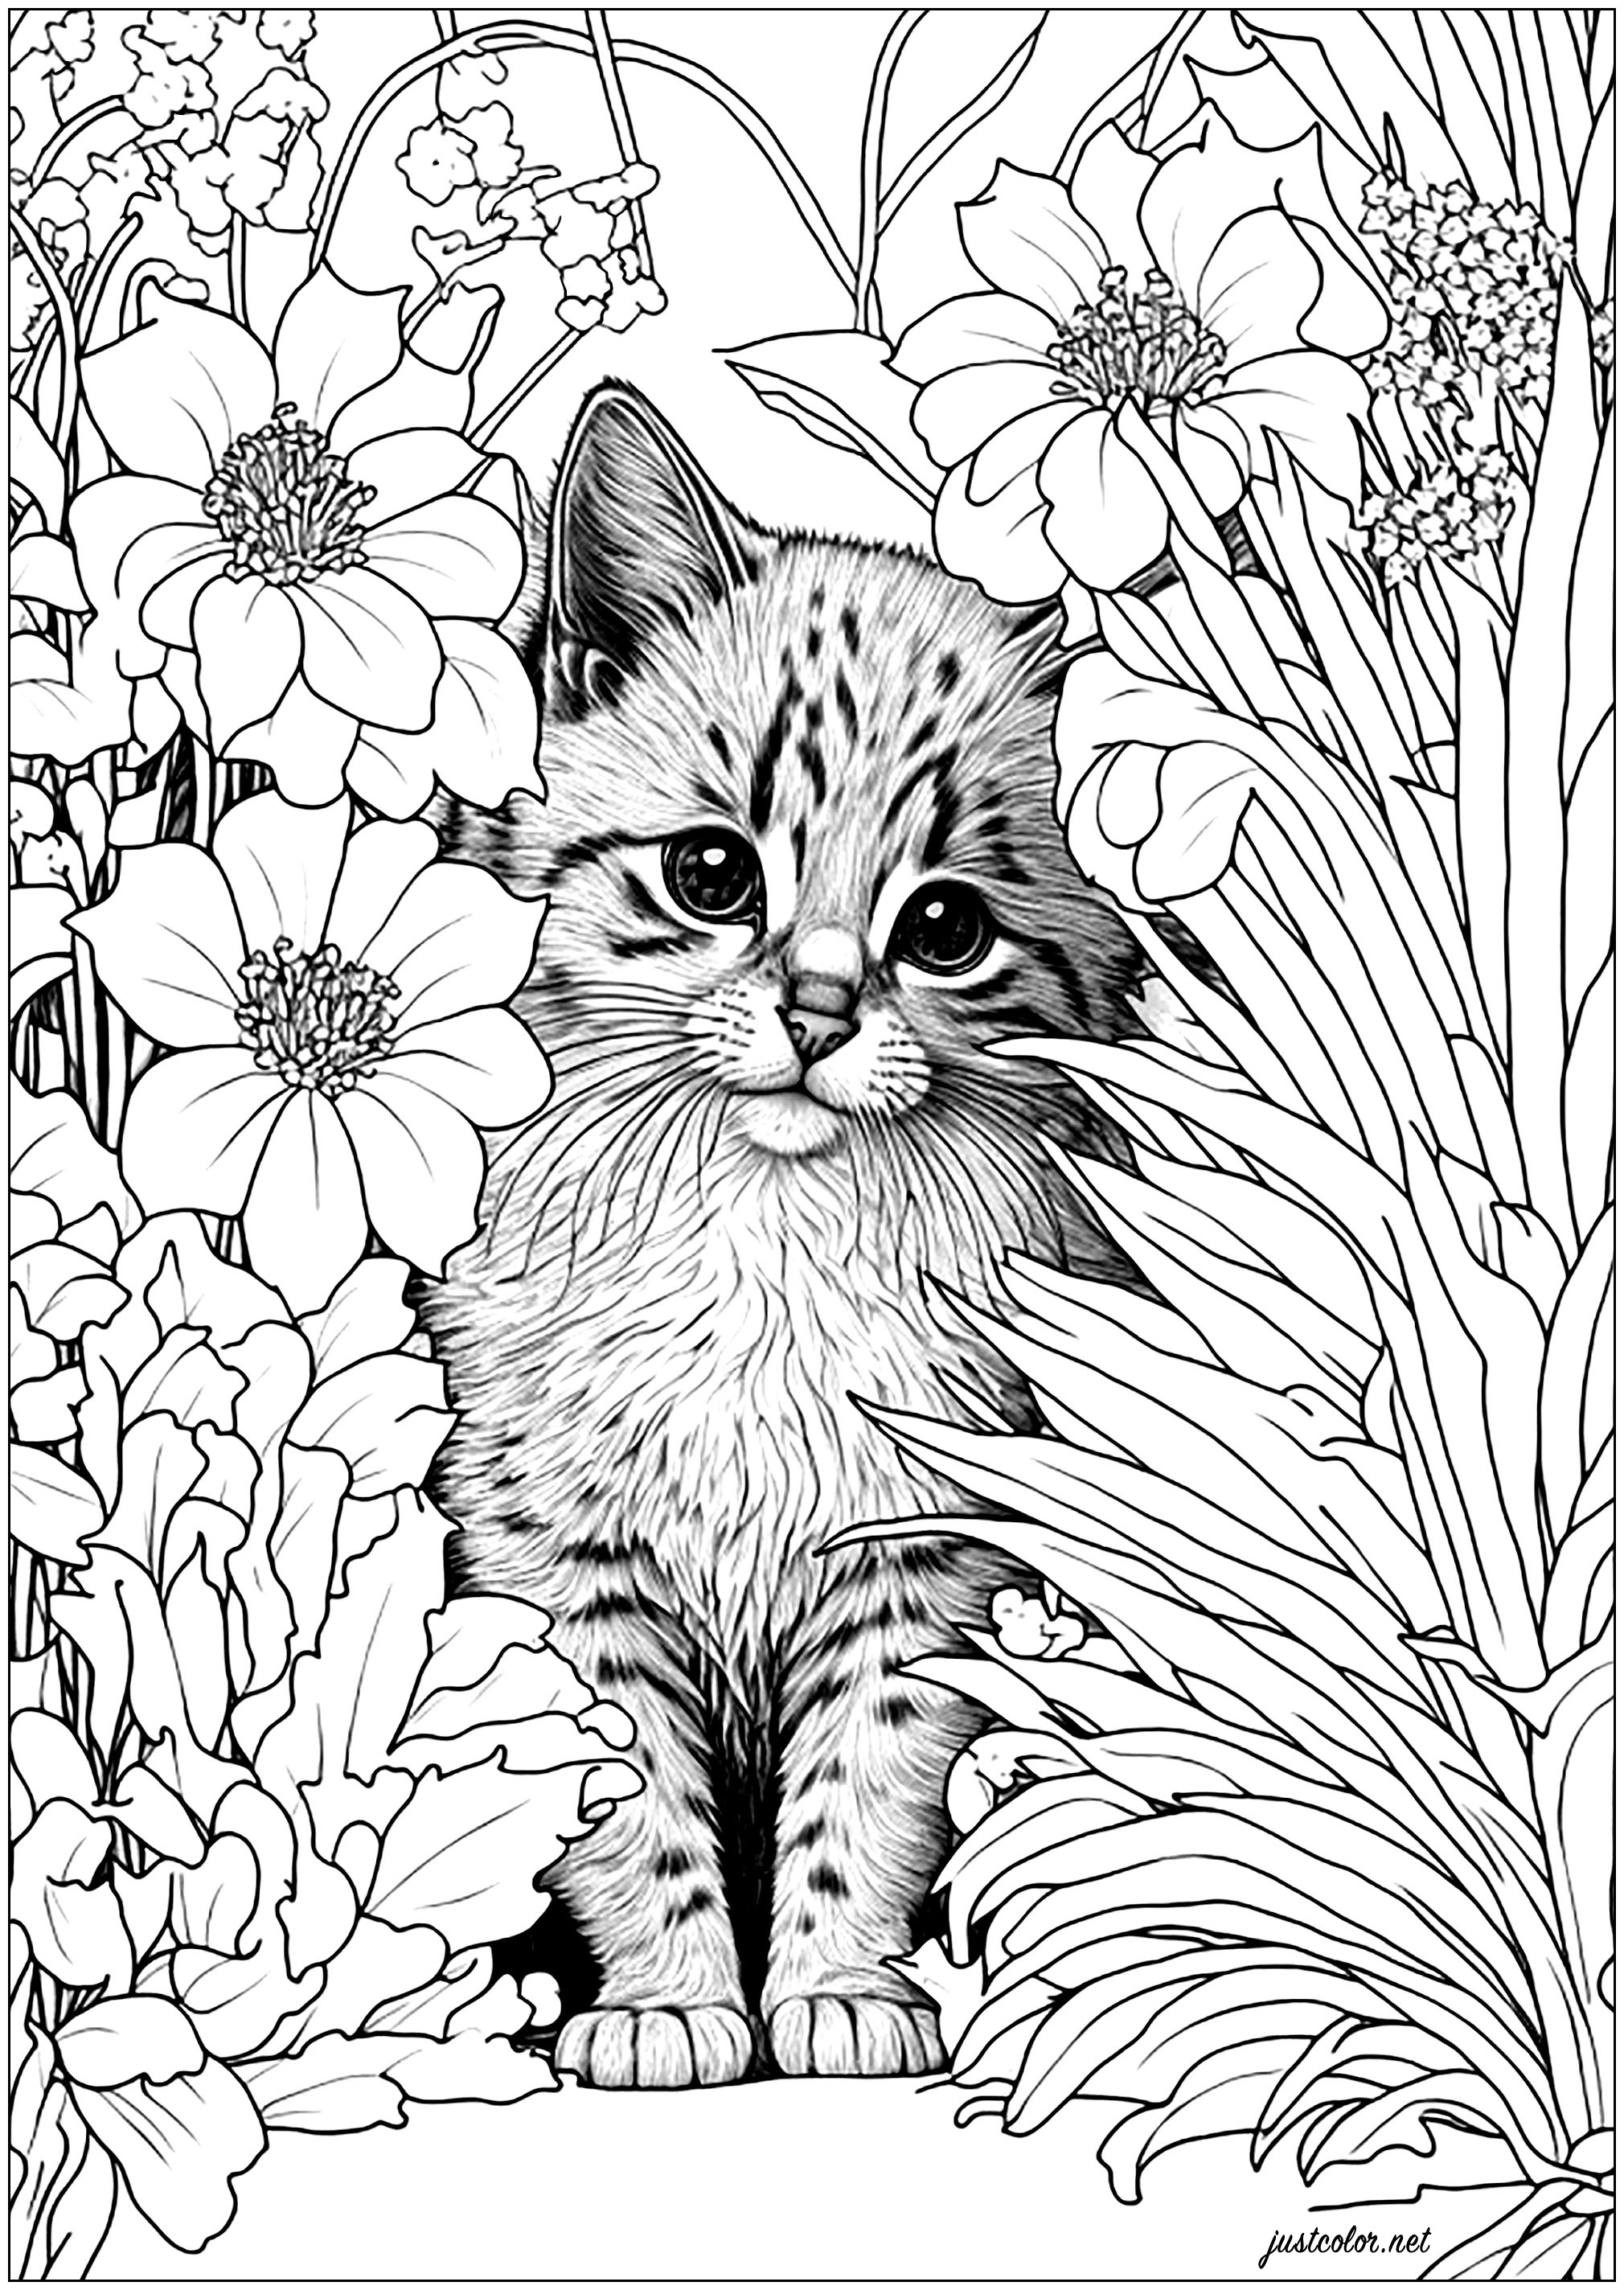 Cute, realistic cat hidden behind flowers